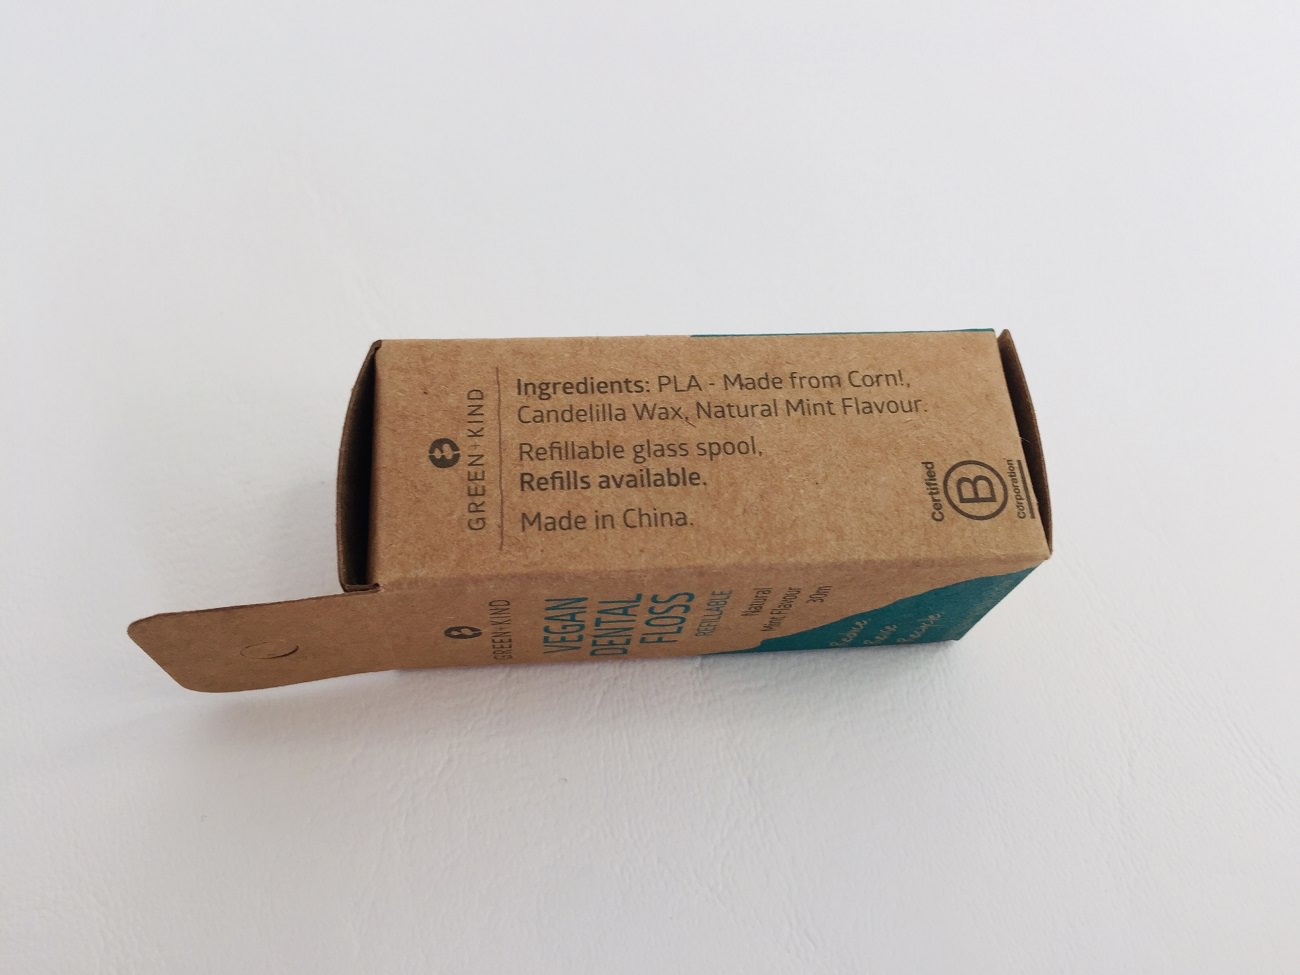 Details of the Green + Kind Vegan Dental Floss on the packaging